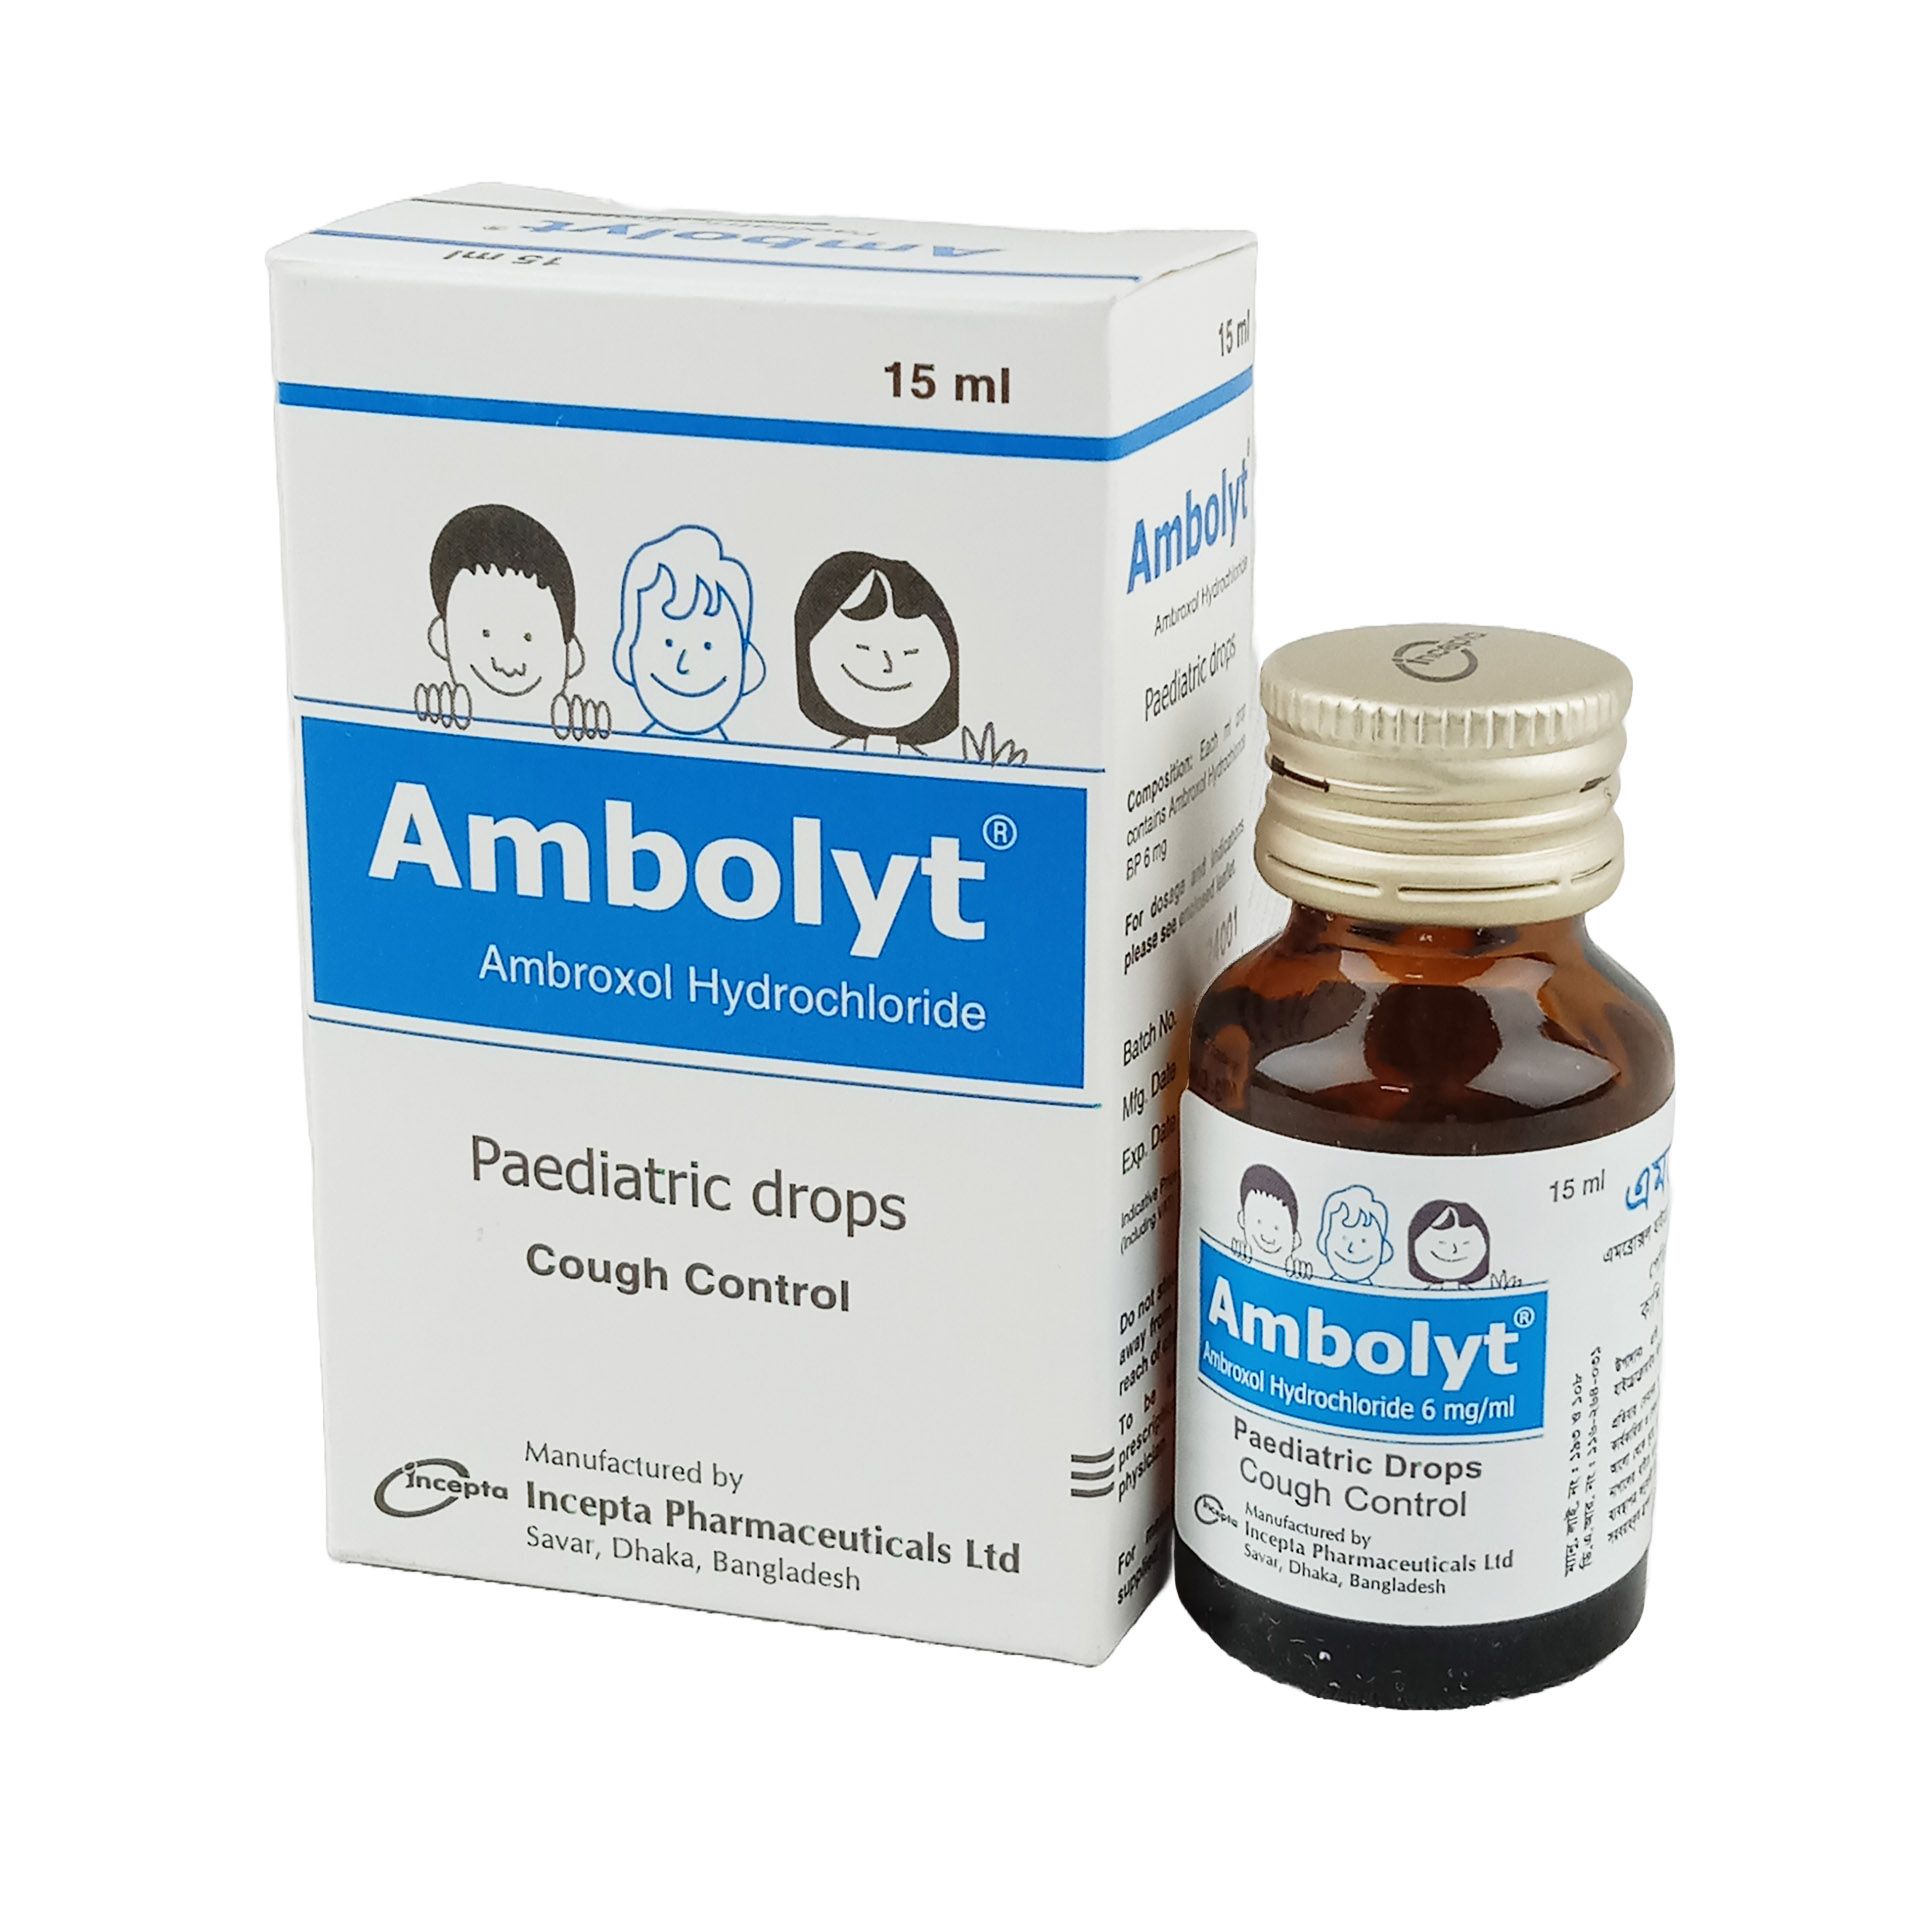 Ambolyt Paediatric Drops 6mg/ml Pediatric Drops